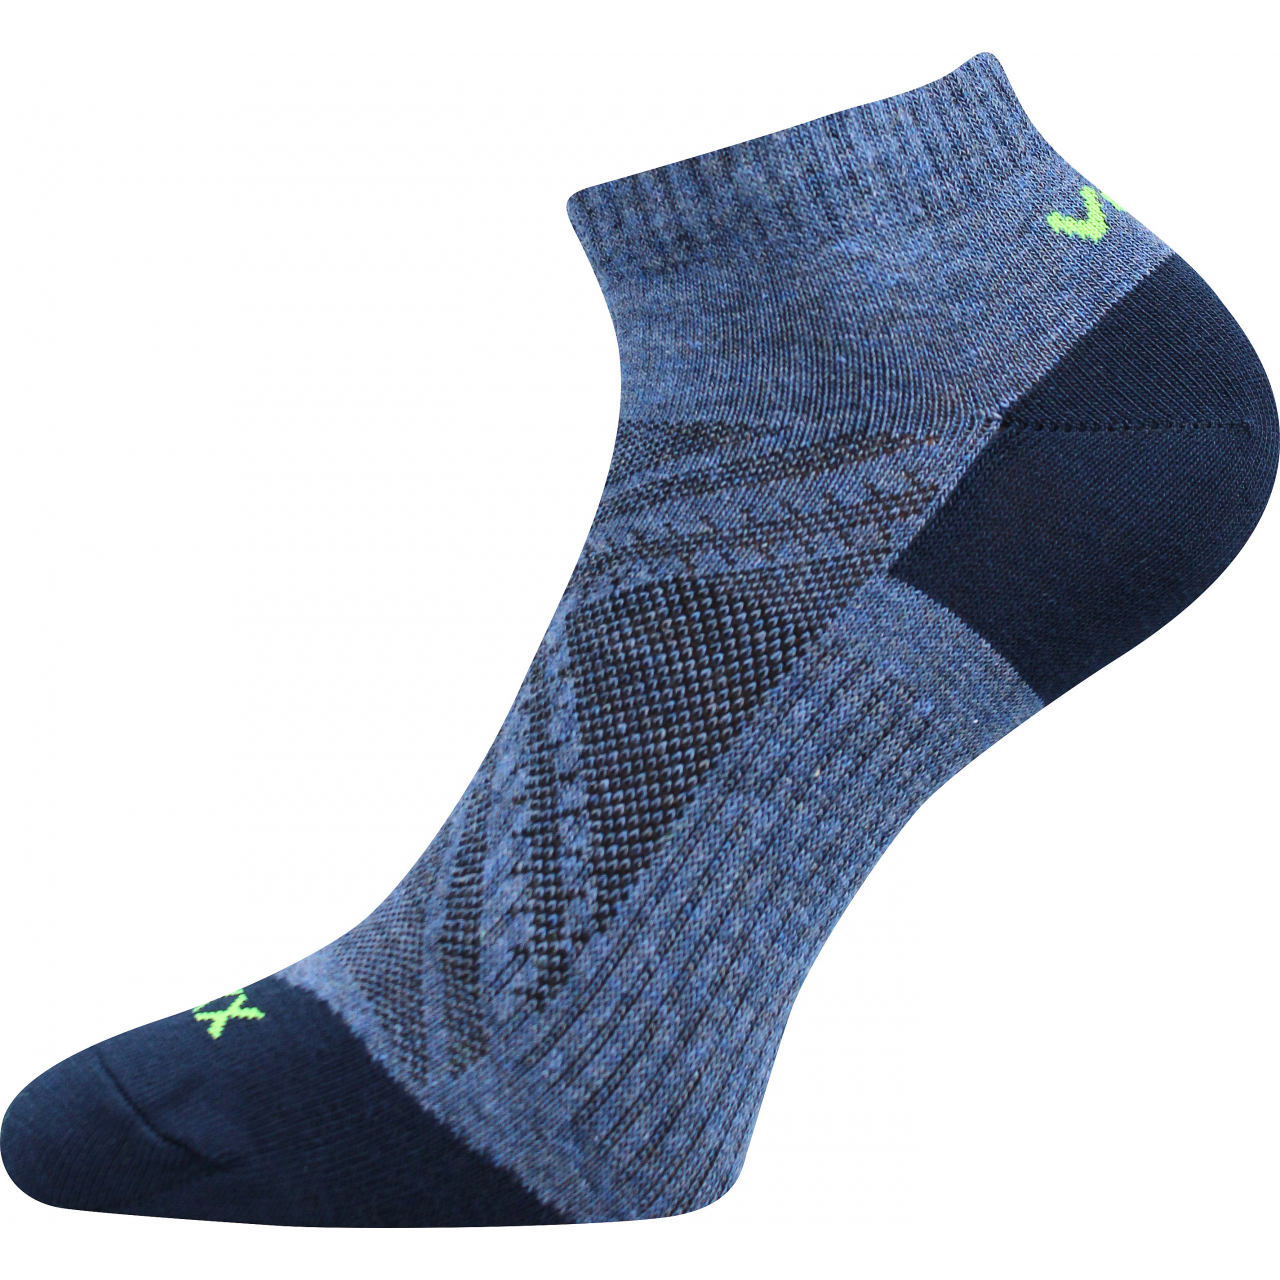 Ponožky slabé unisex Voxx Rex 15 - modré, 43-46